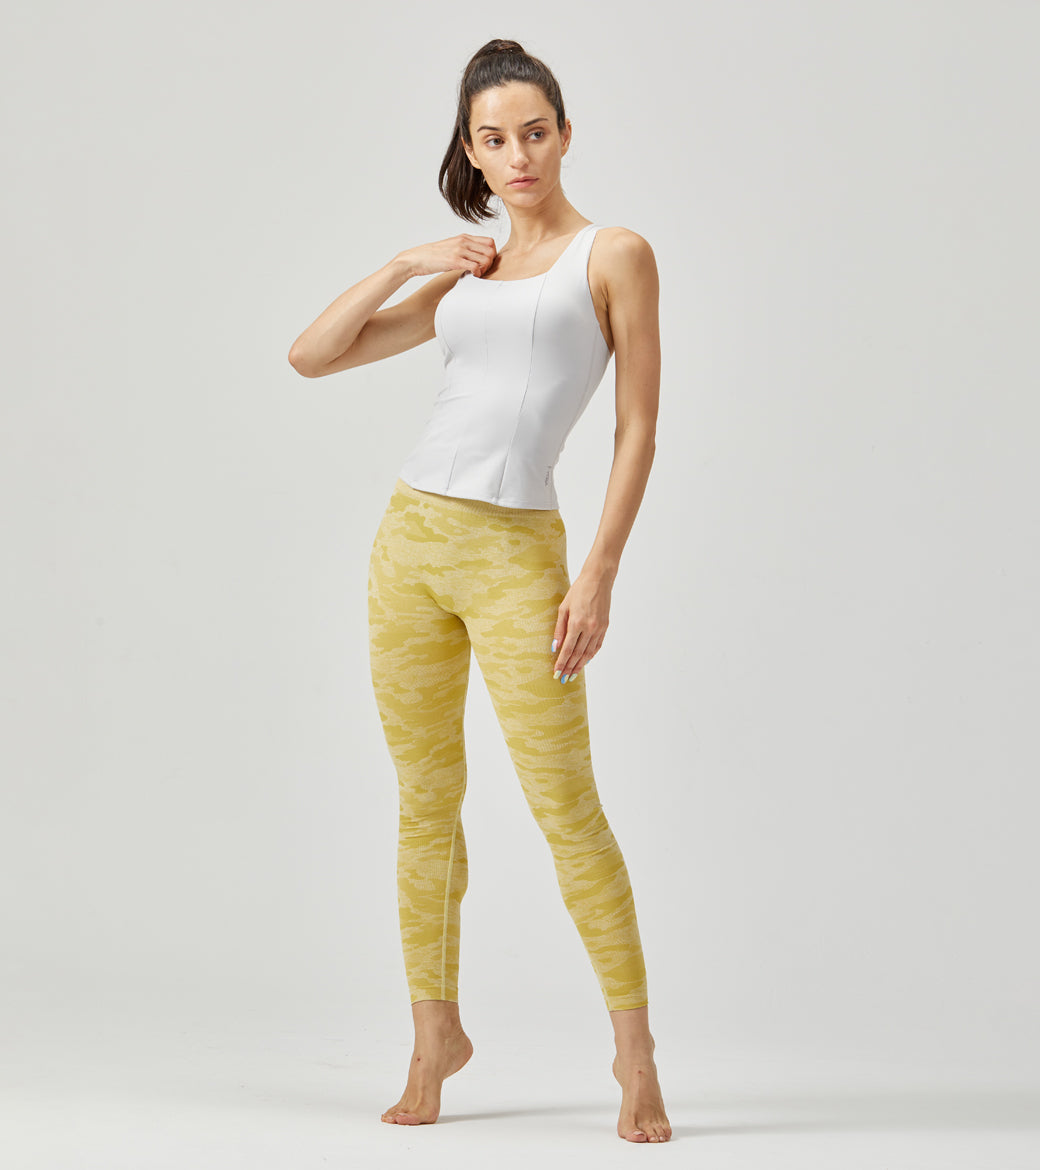 LOVESOFT Women's Yellow Camo Seamless Leggings High Waist Hip-lifting Pants